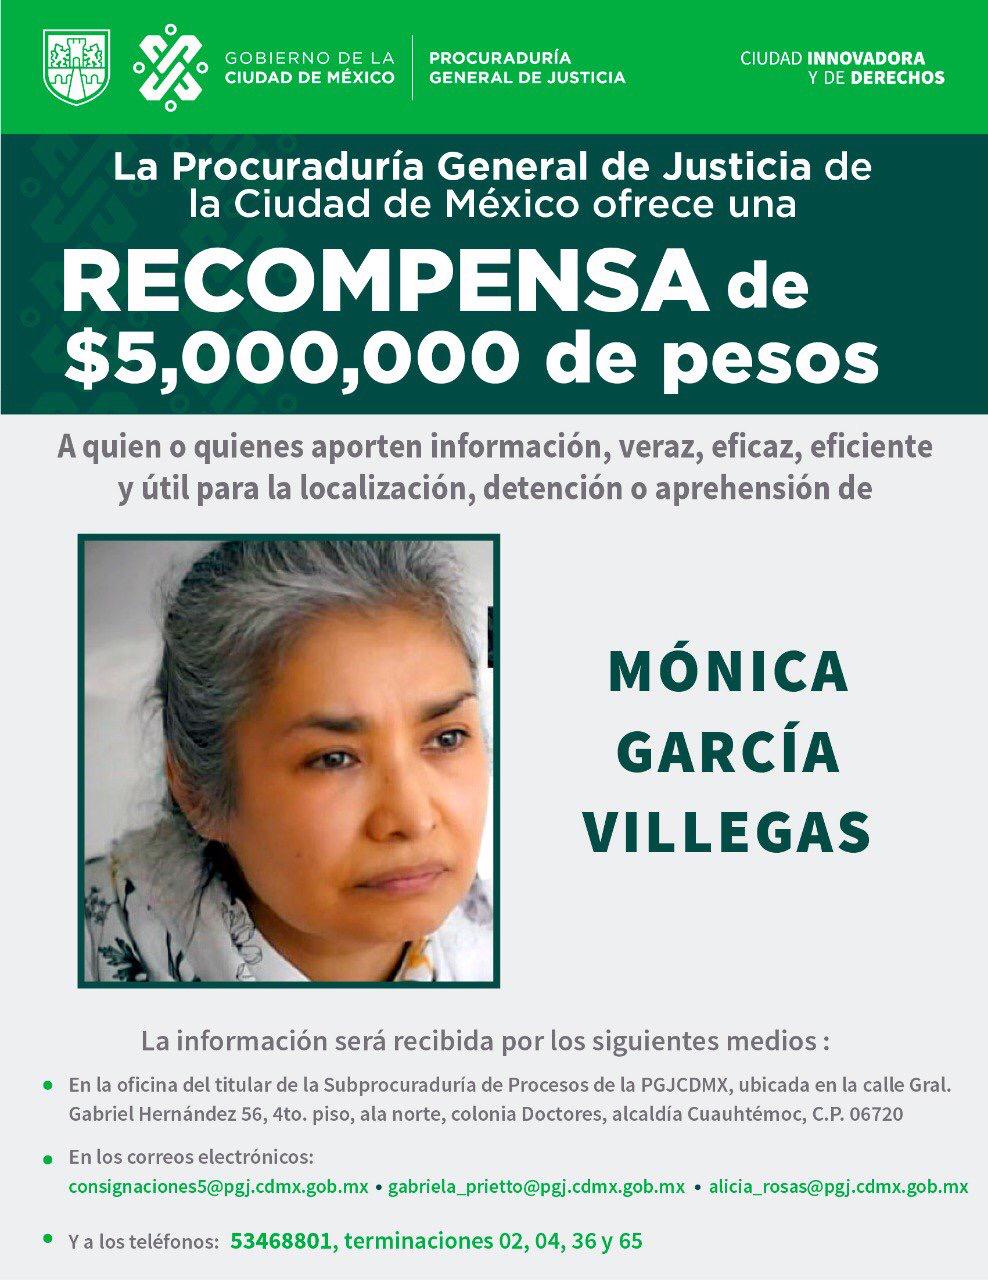 Monica Garcia Villegas